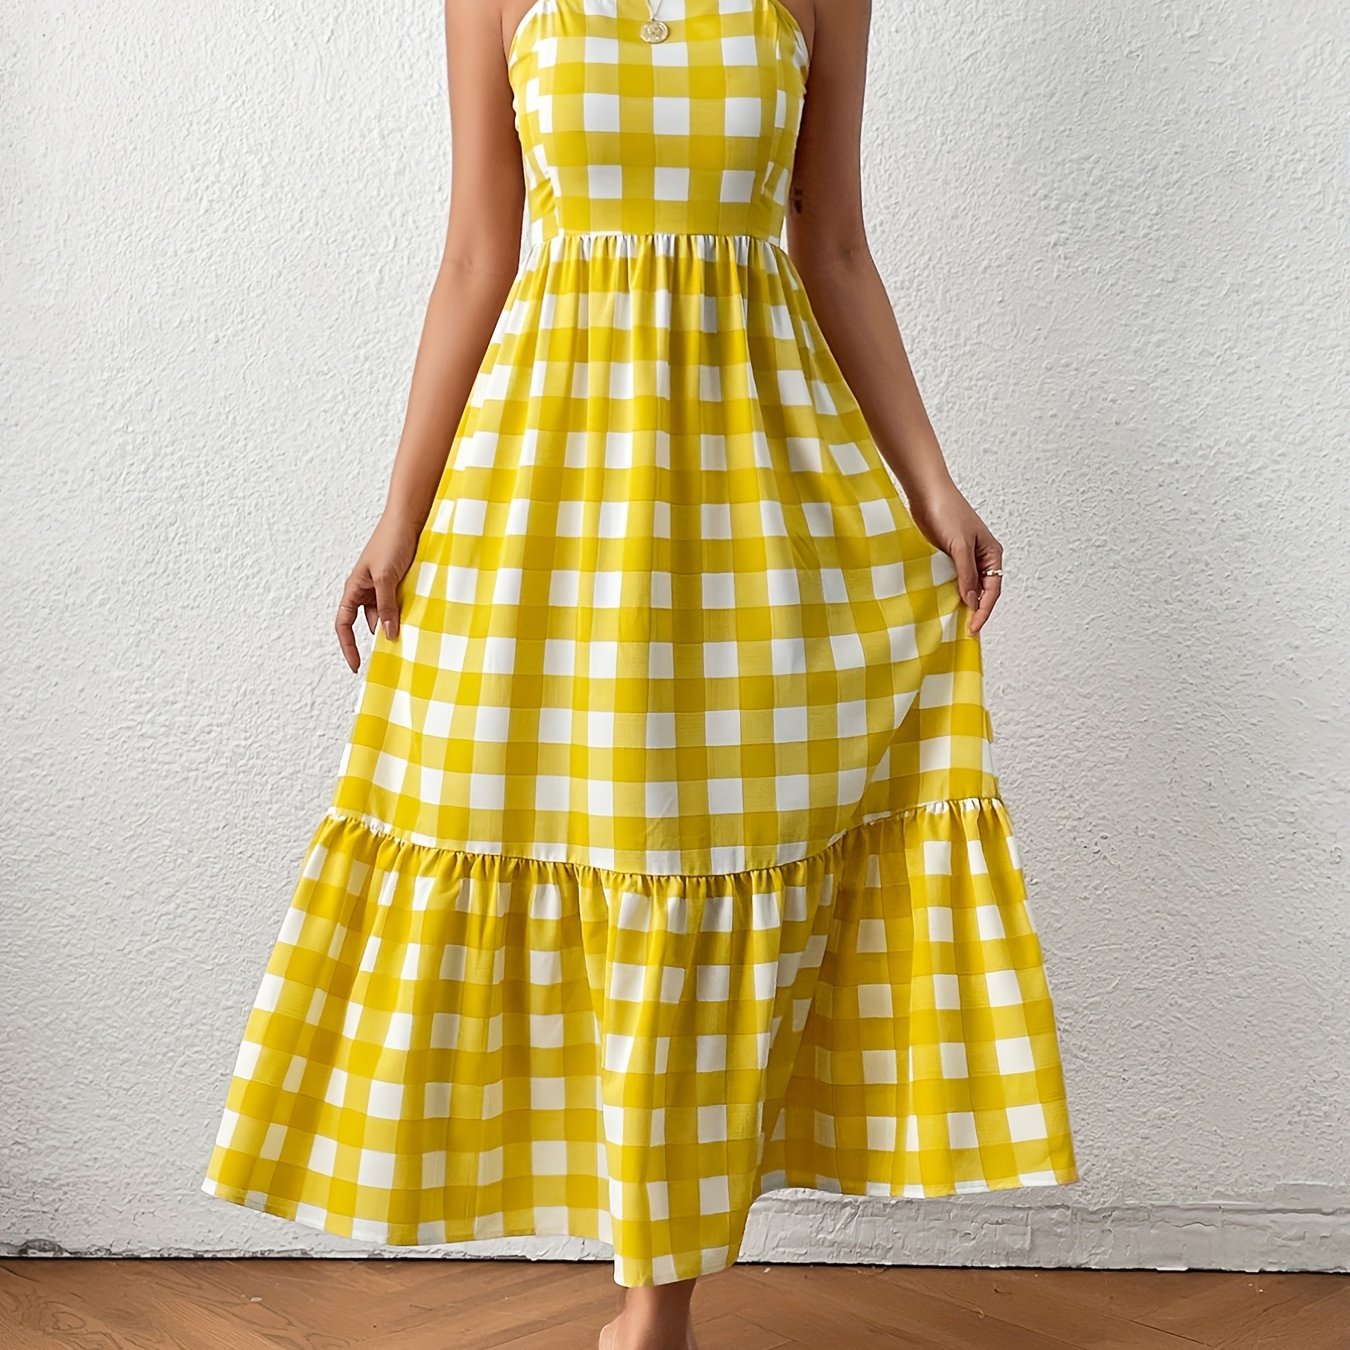 vlovelaw Gingham Print Cami Dress, High Waist Casual Dress For Summer & Spring, Women's Clothing